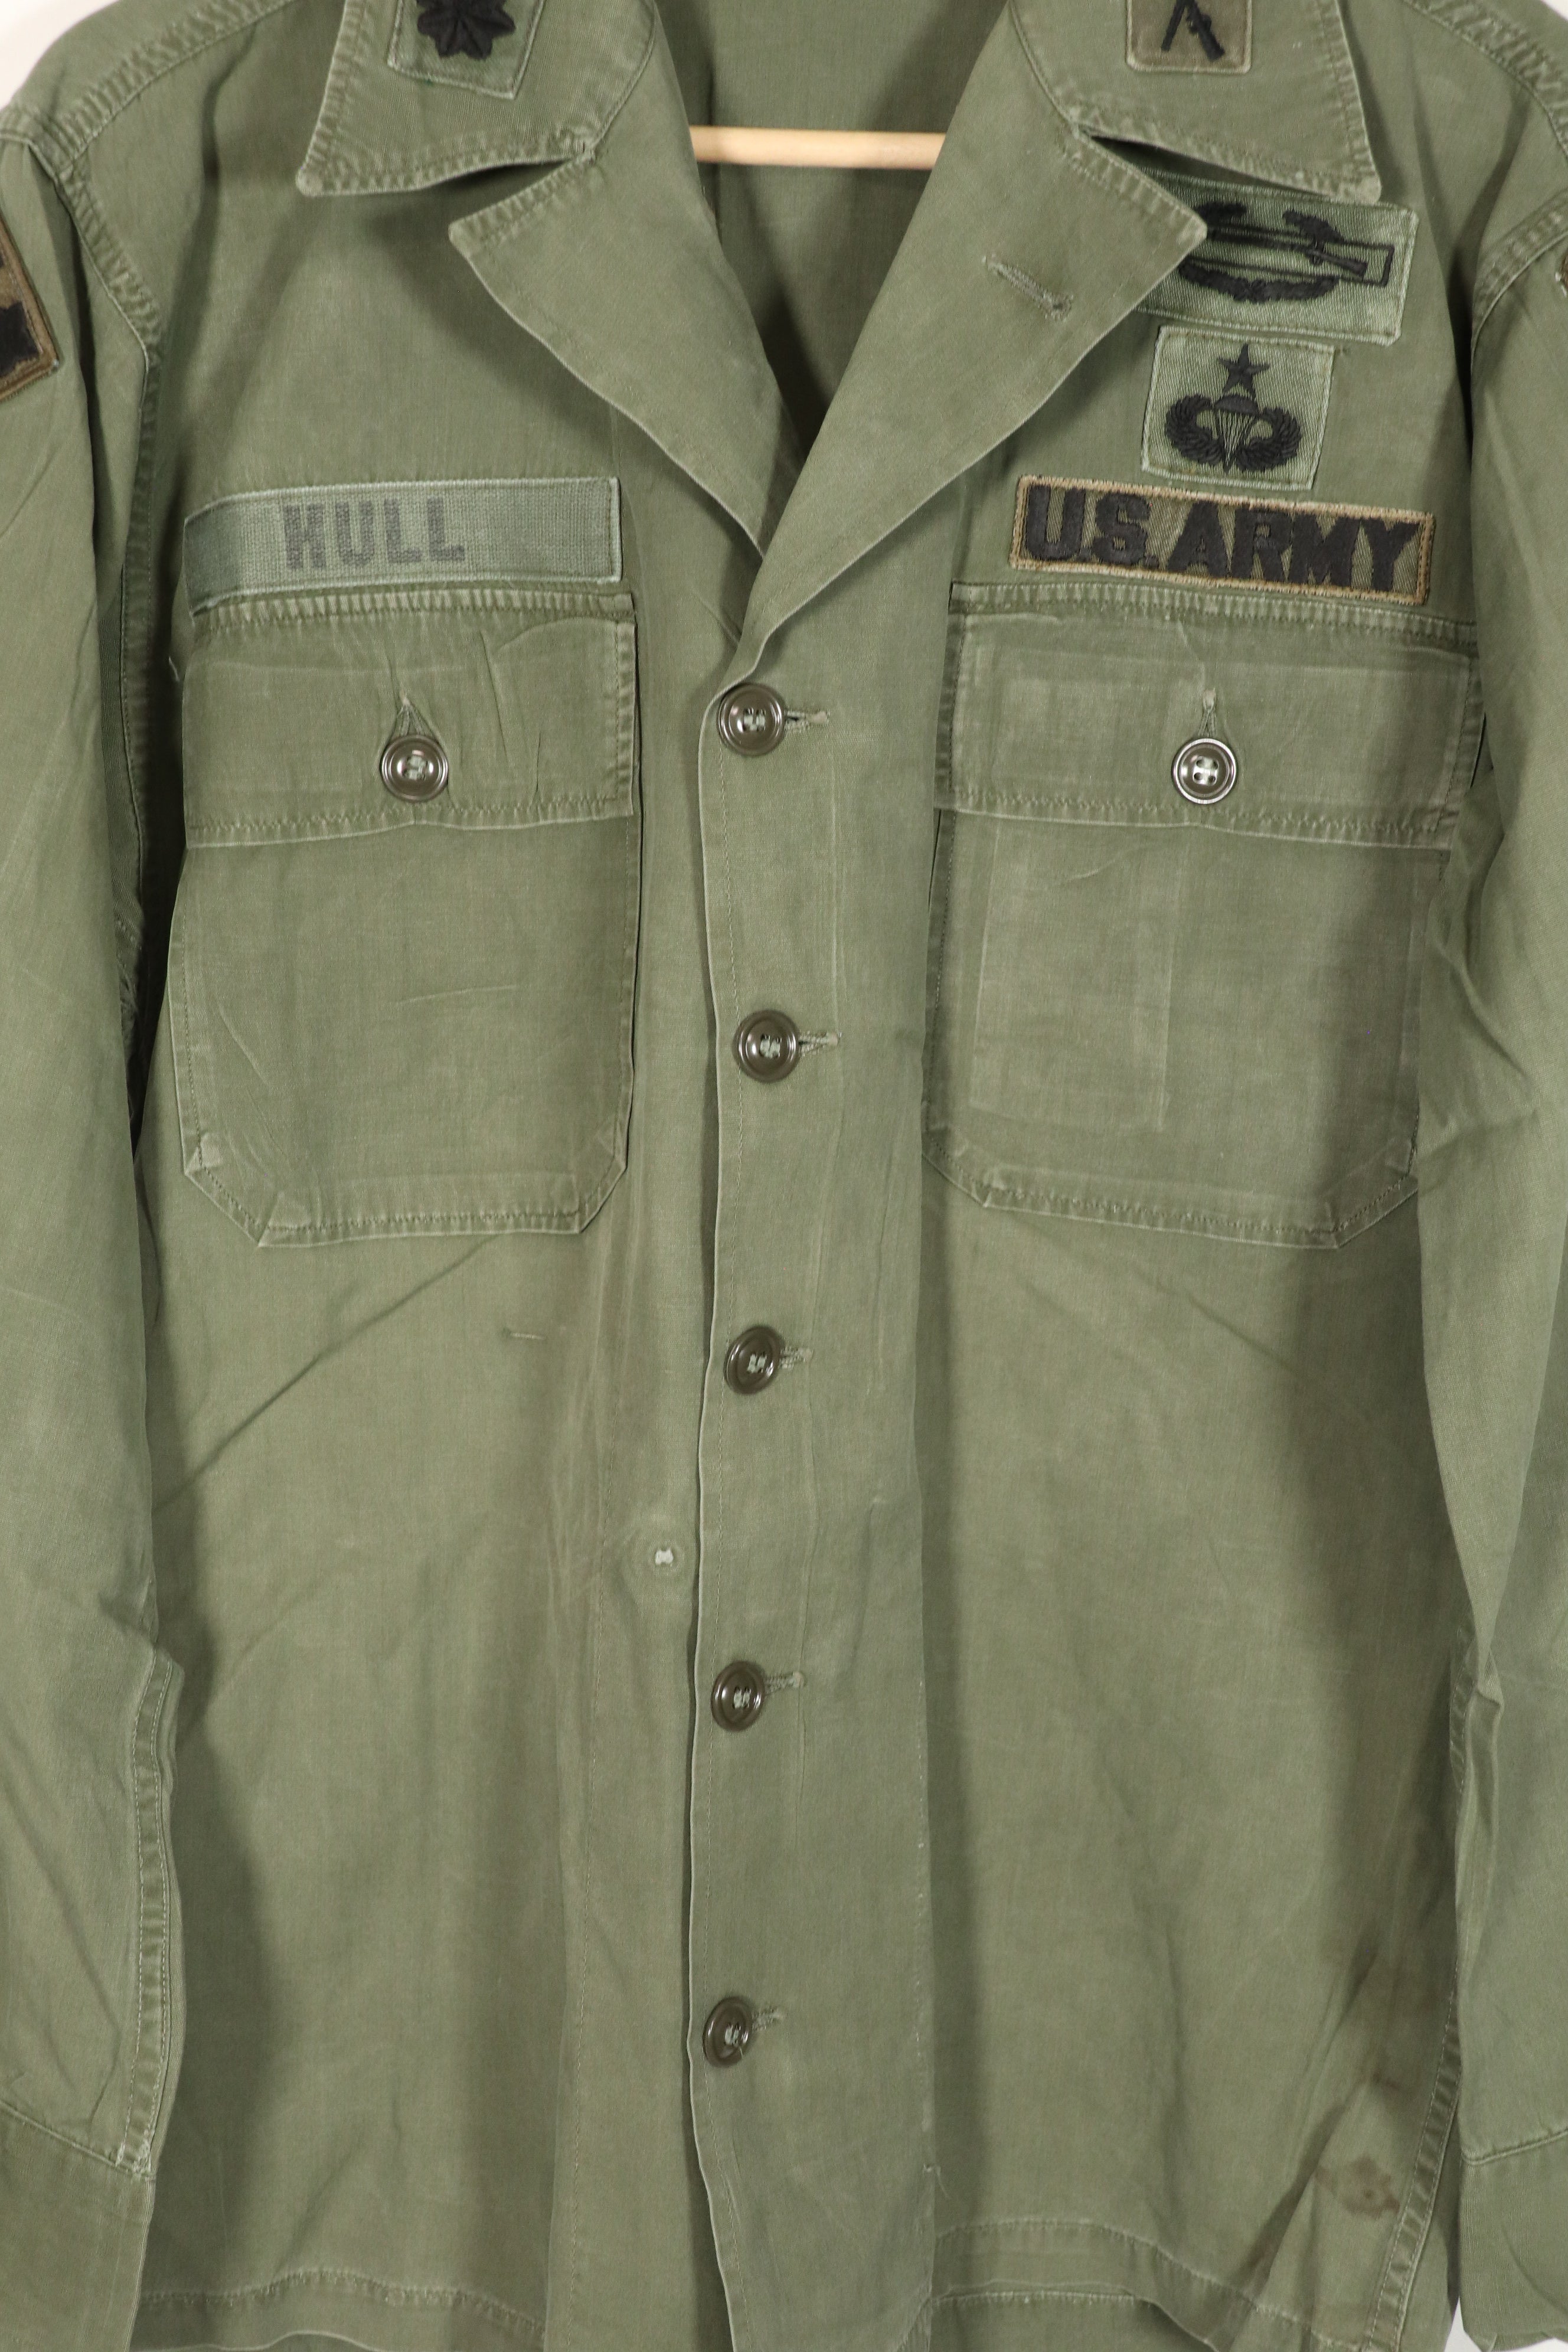 Real Very Rare Special Warfare Shirt, used, glued, B